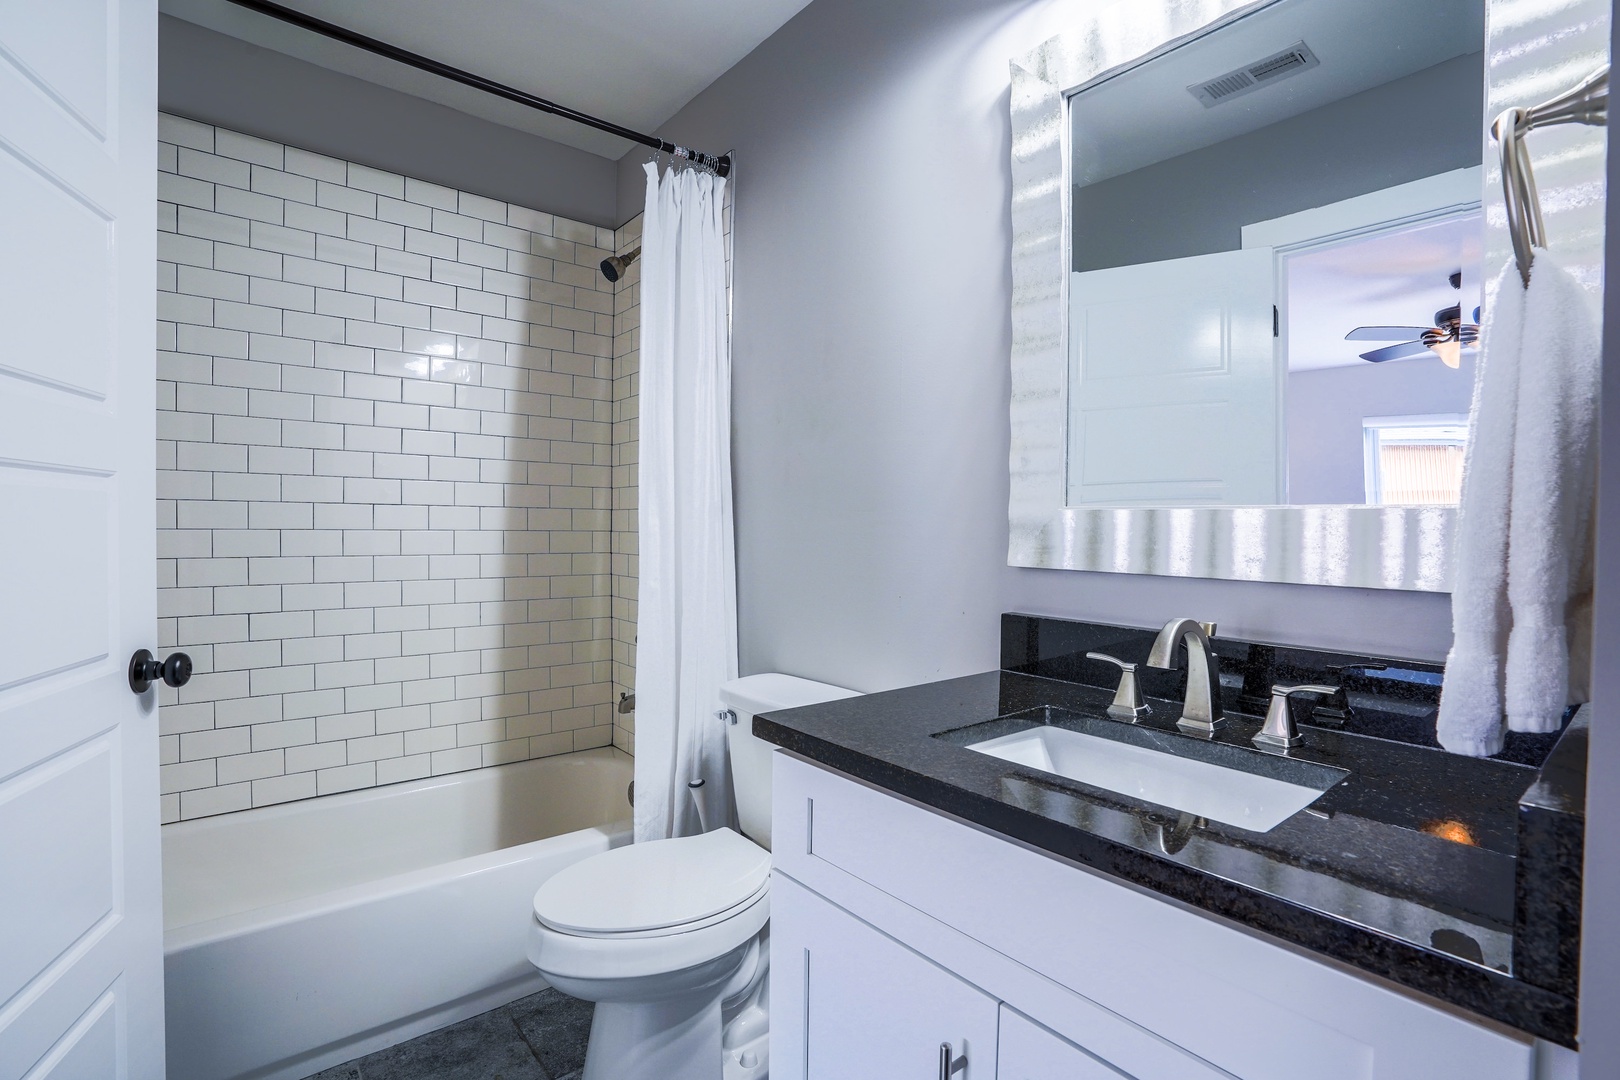 2nd en suite bathroom with shower/tub combo